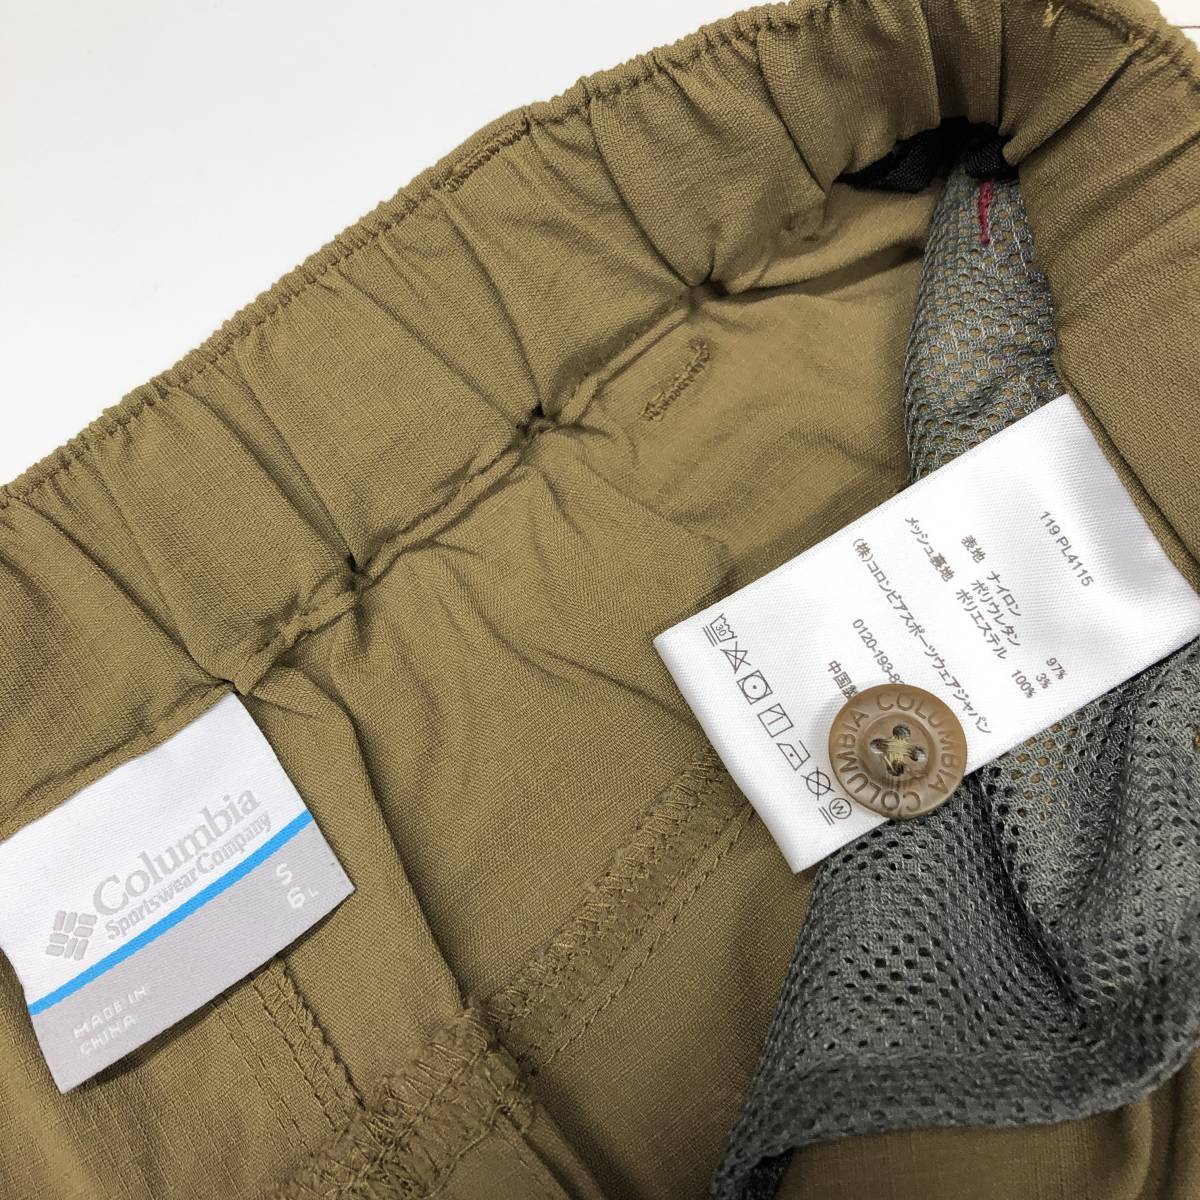  Colombia Columbia springs sk утечка wi мужской юбка-брюки PL4115 женский S размер нейлон 